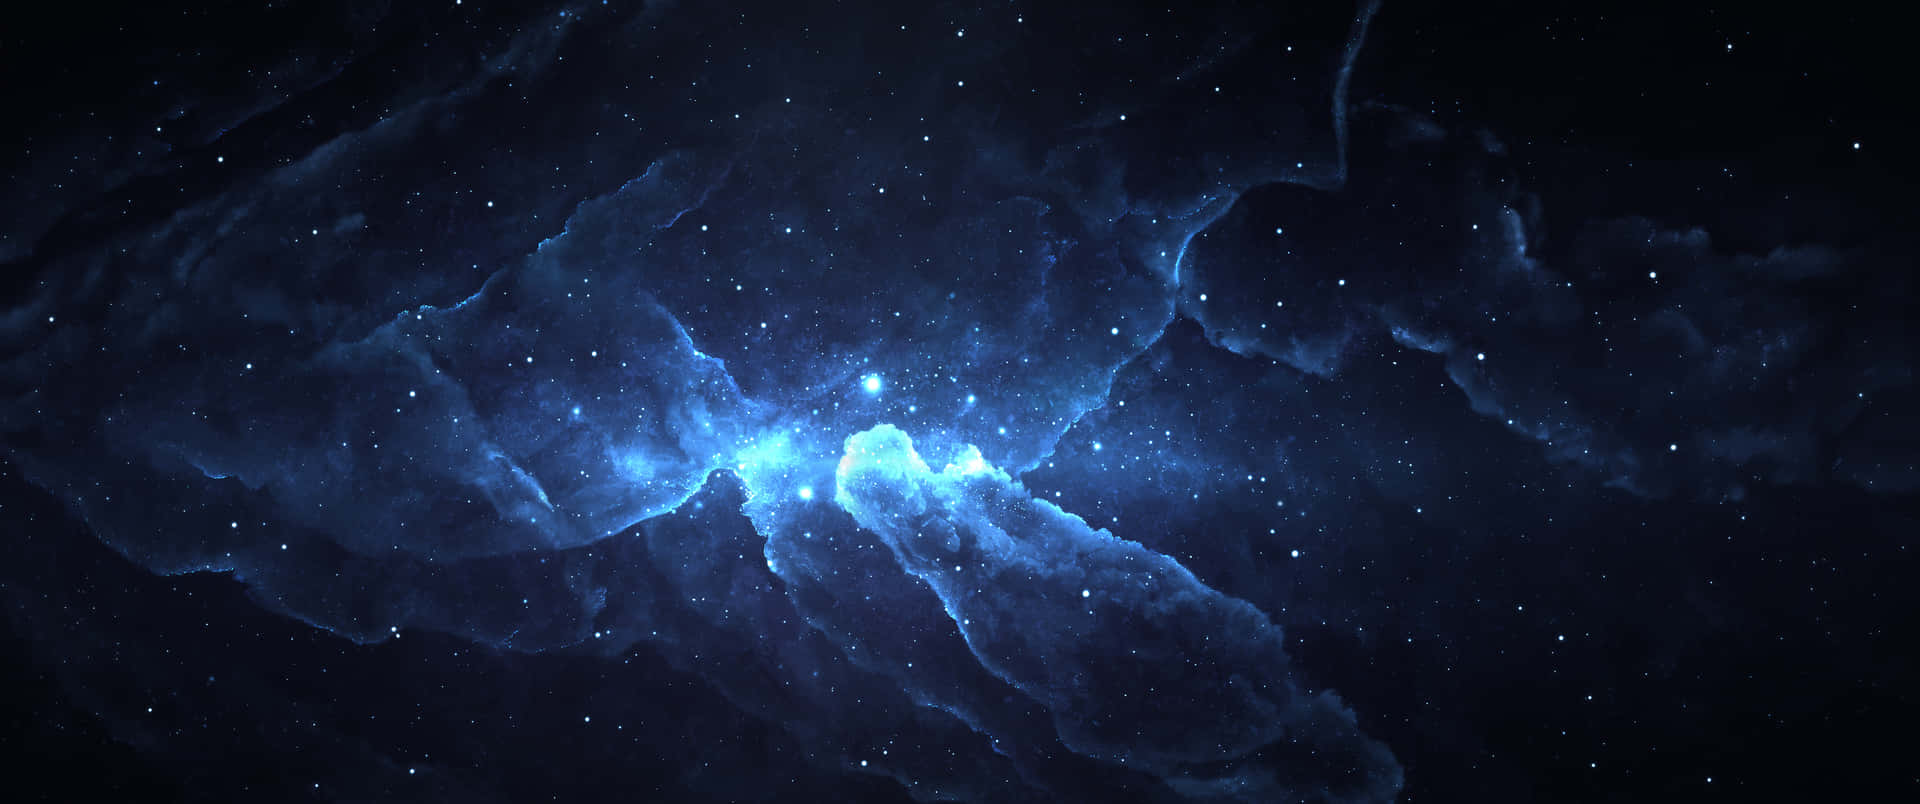 Generazionidi Nebulose Catturate In Un'unica Immagine. Sfondo